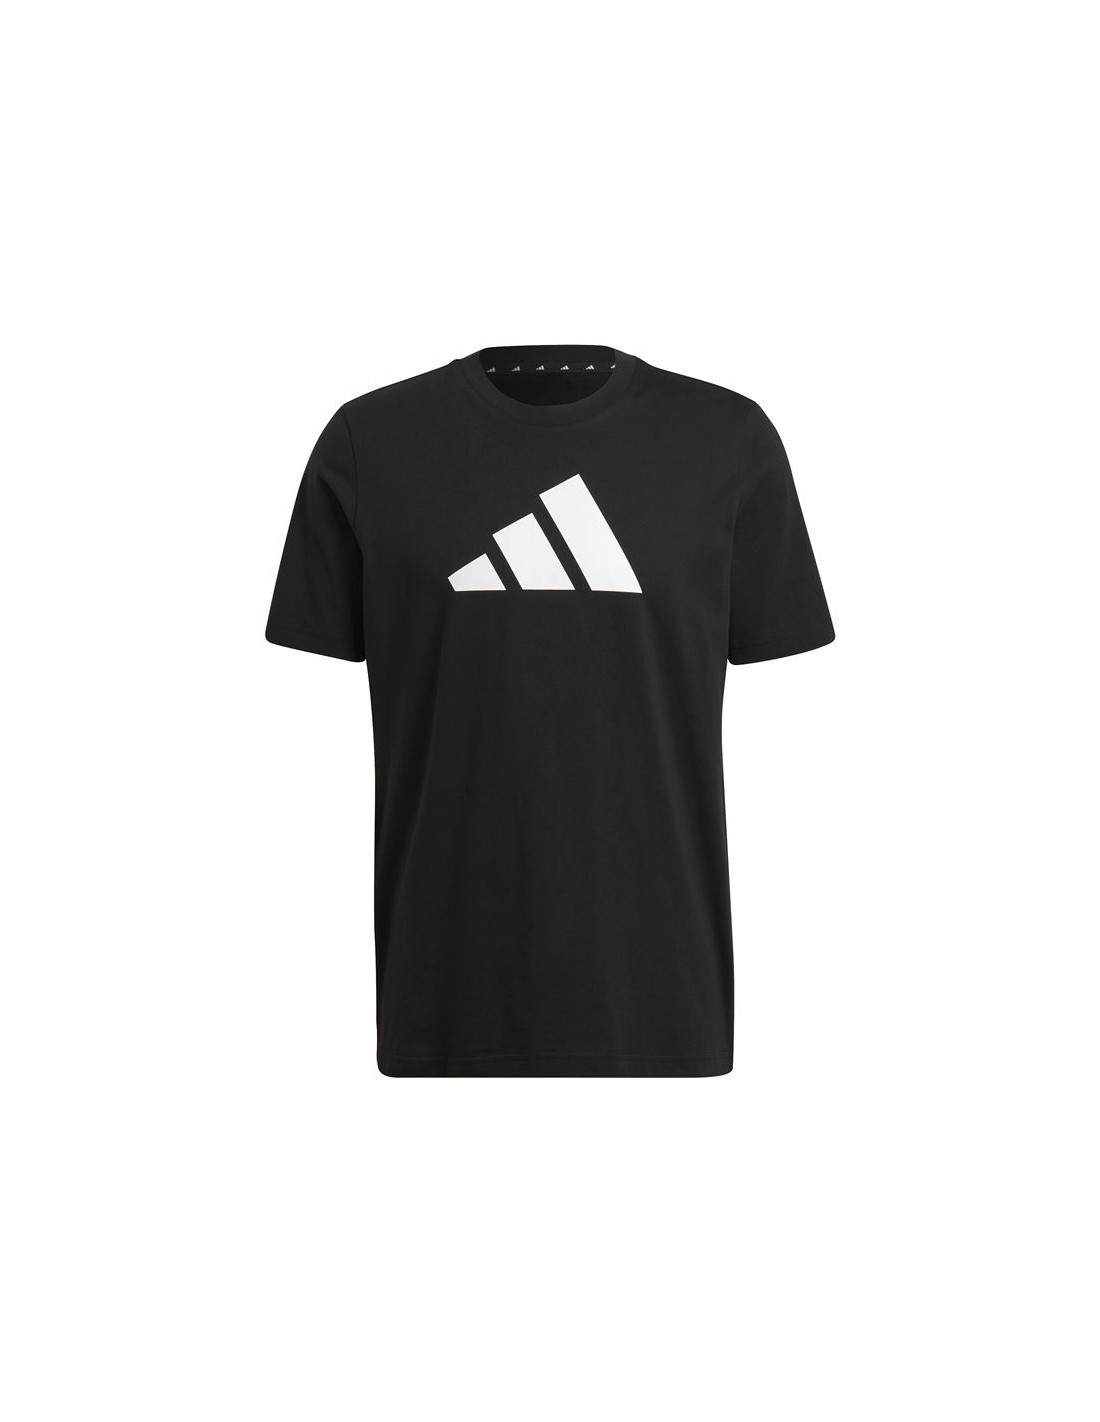 Camiseta adidas future icons logo m black